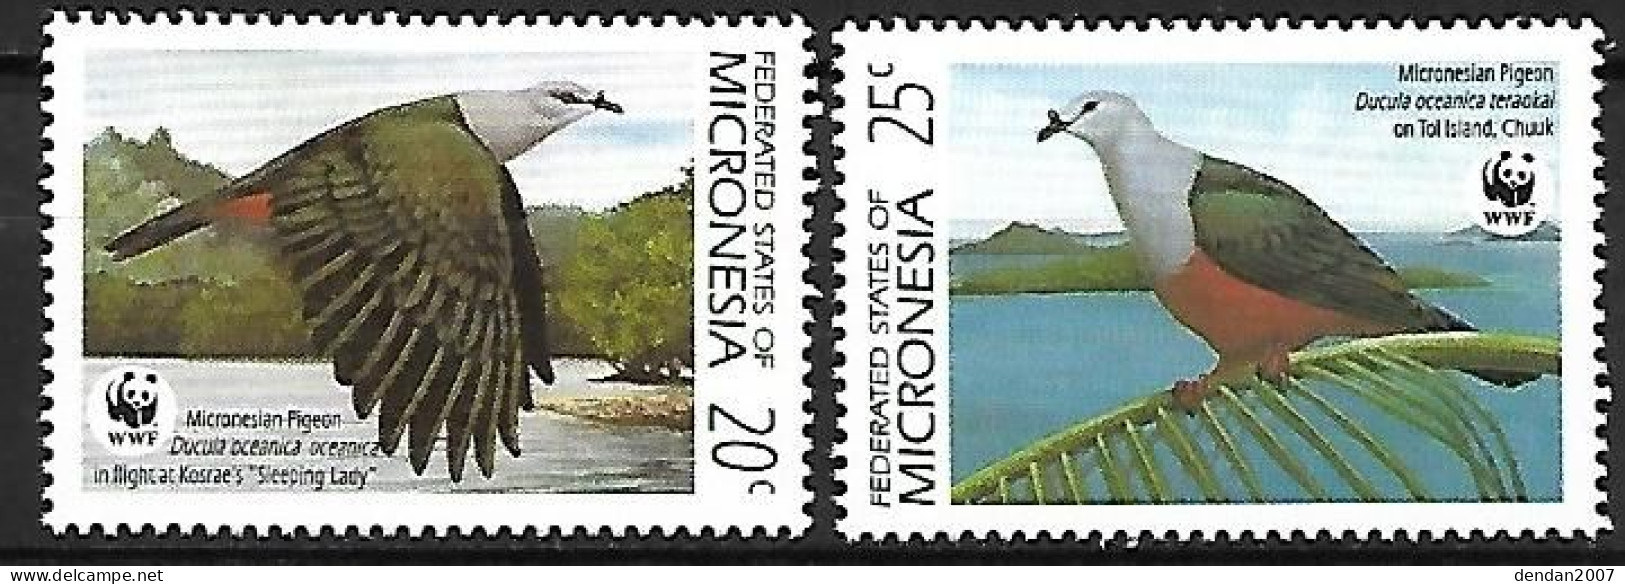 Micronesia - MNH ** 1990 :  Micronesian Imperial Pigeon  -  Ducula Oceanica - Columbiformes